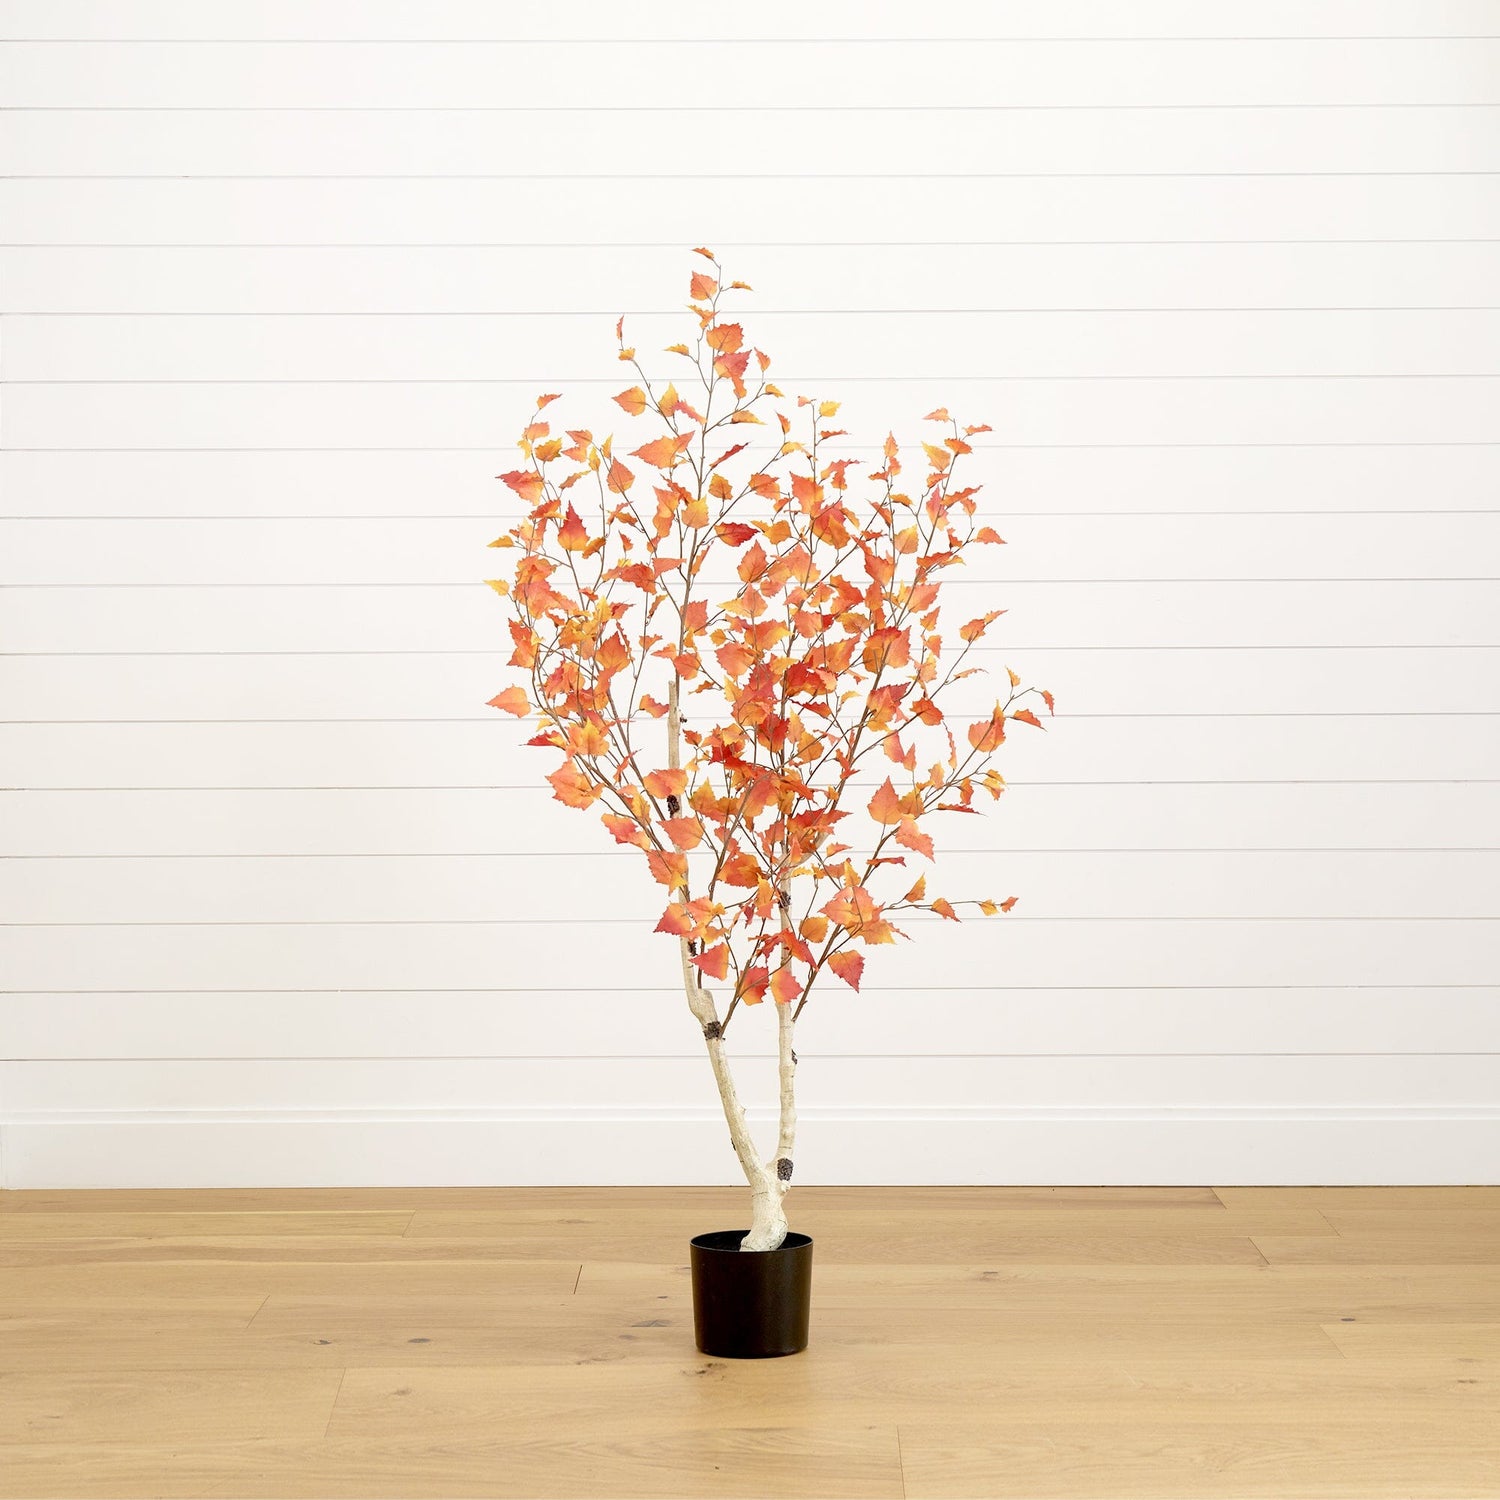 5’ Autumn Birch Artificial Fall Tree